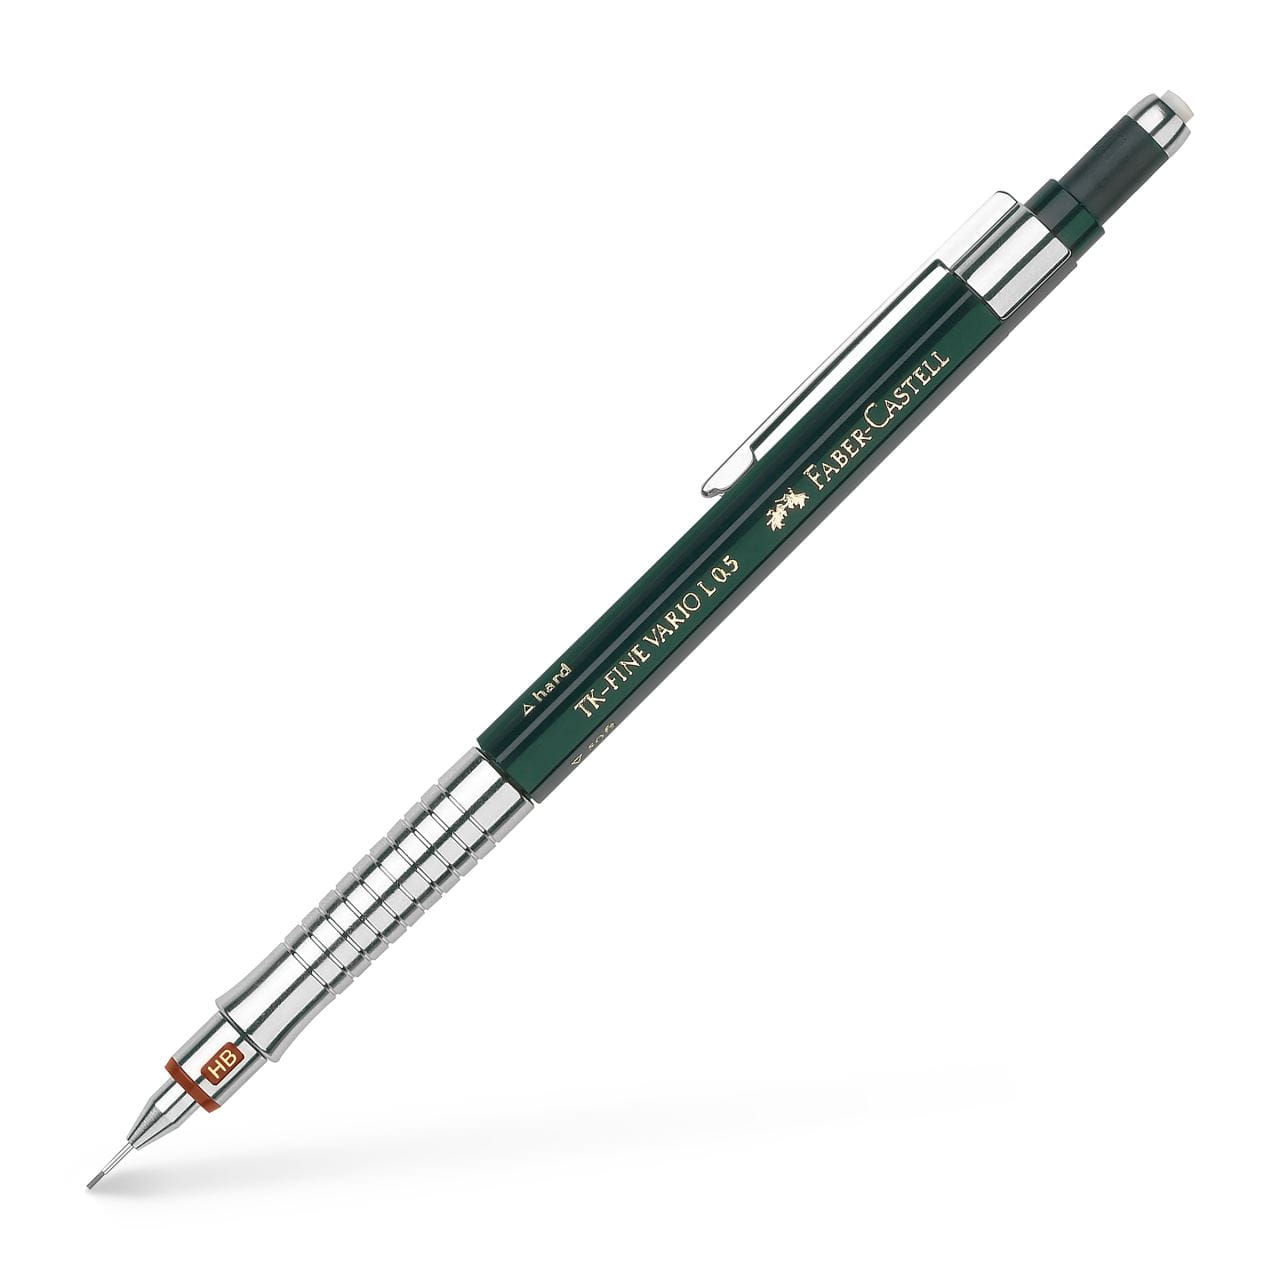 Faber-Castell - TK-Fine Vario L mechanical pencil, 0.5 mm